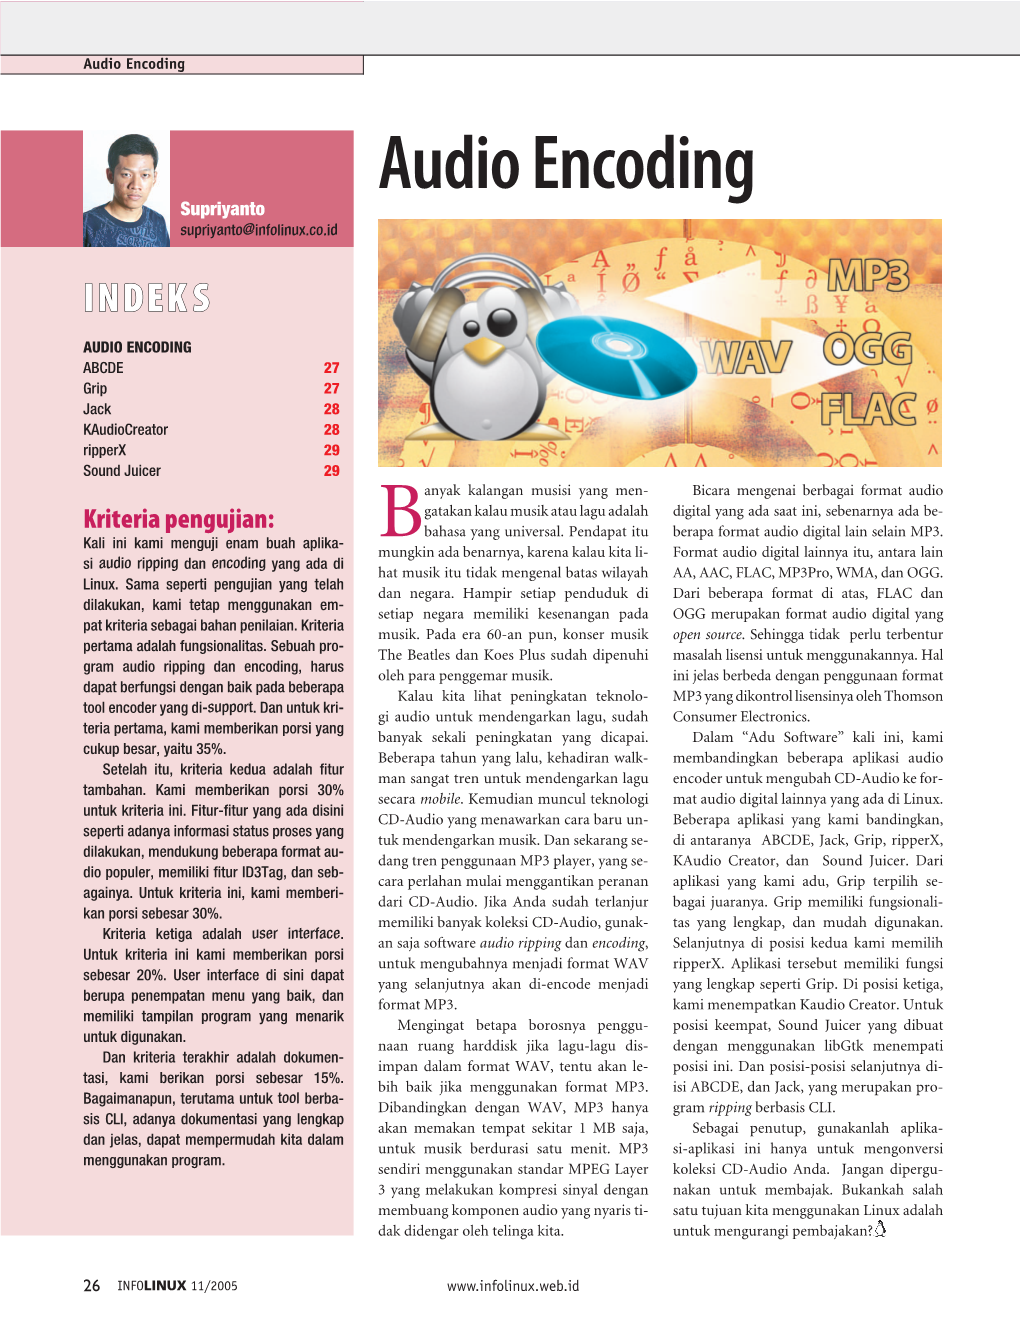 Audio Encoding Audio Encoding Supriyanto Supriyanto@Infolinux.Co.Id IINDENDEKKSS